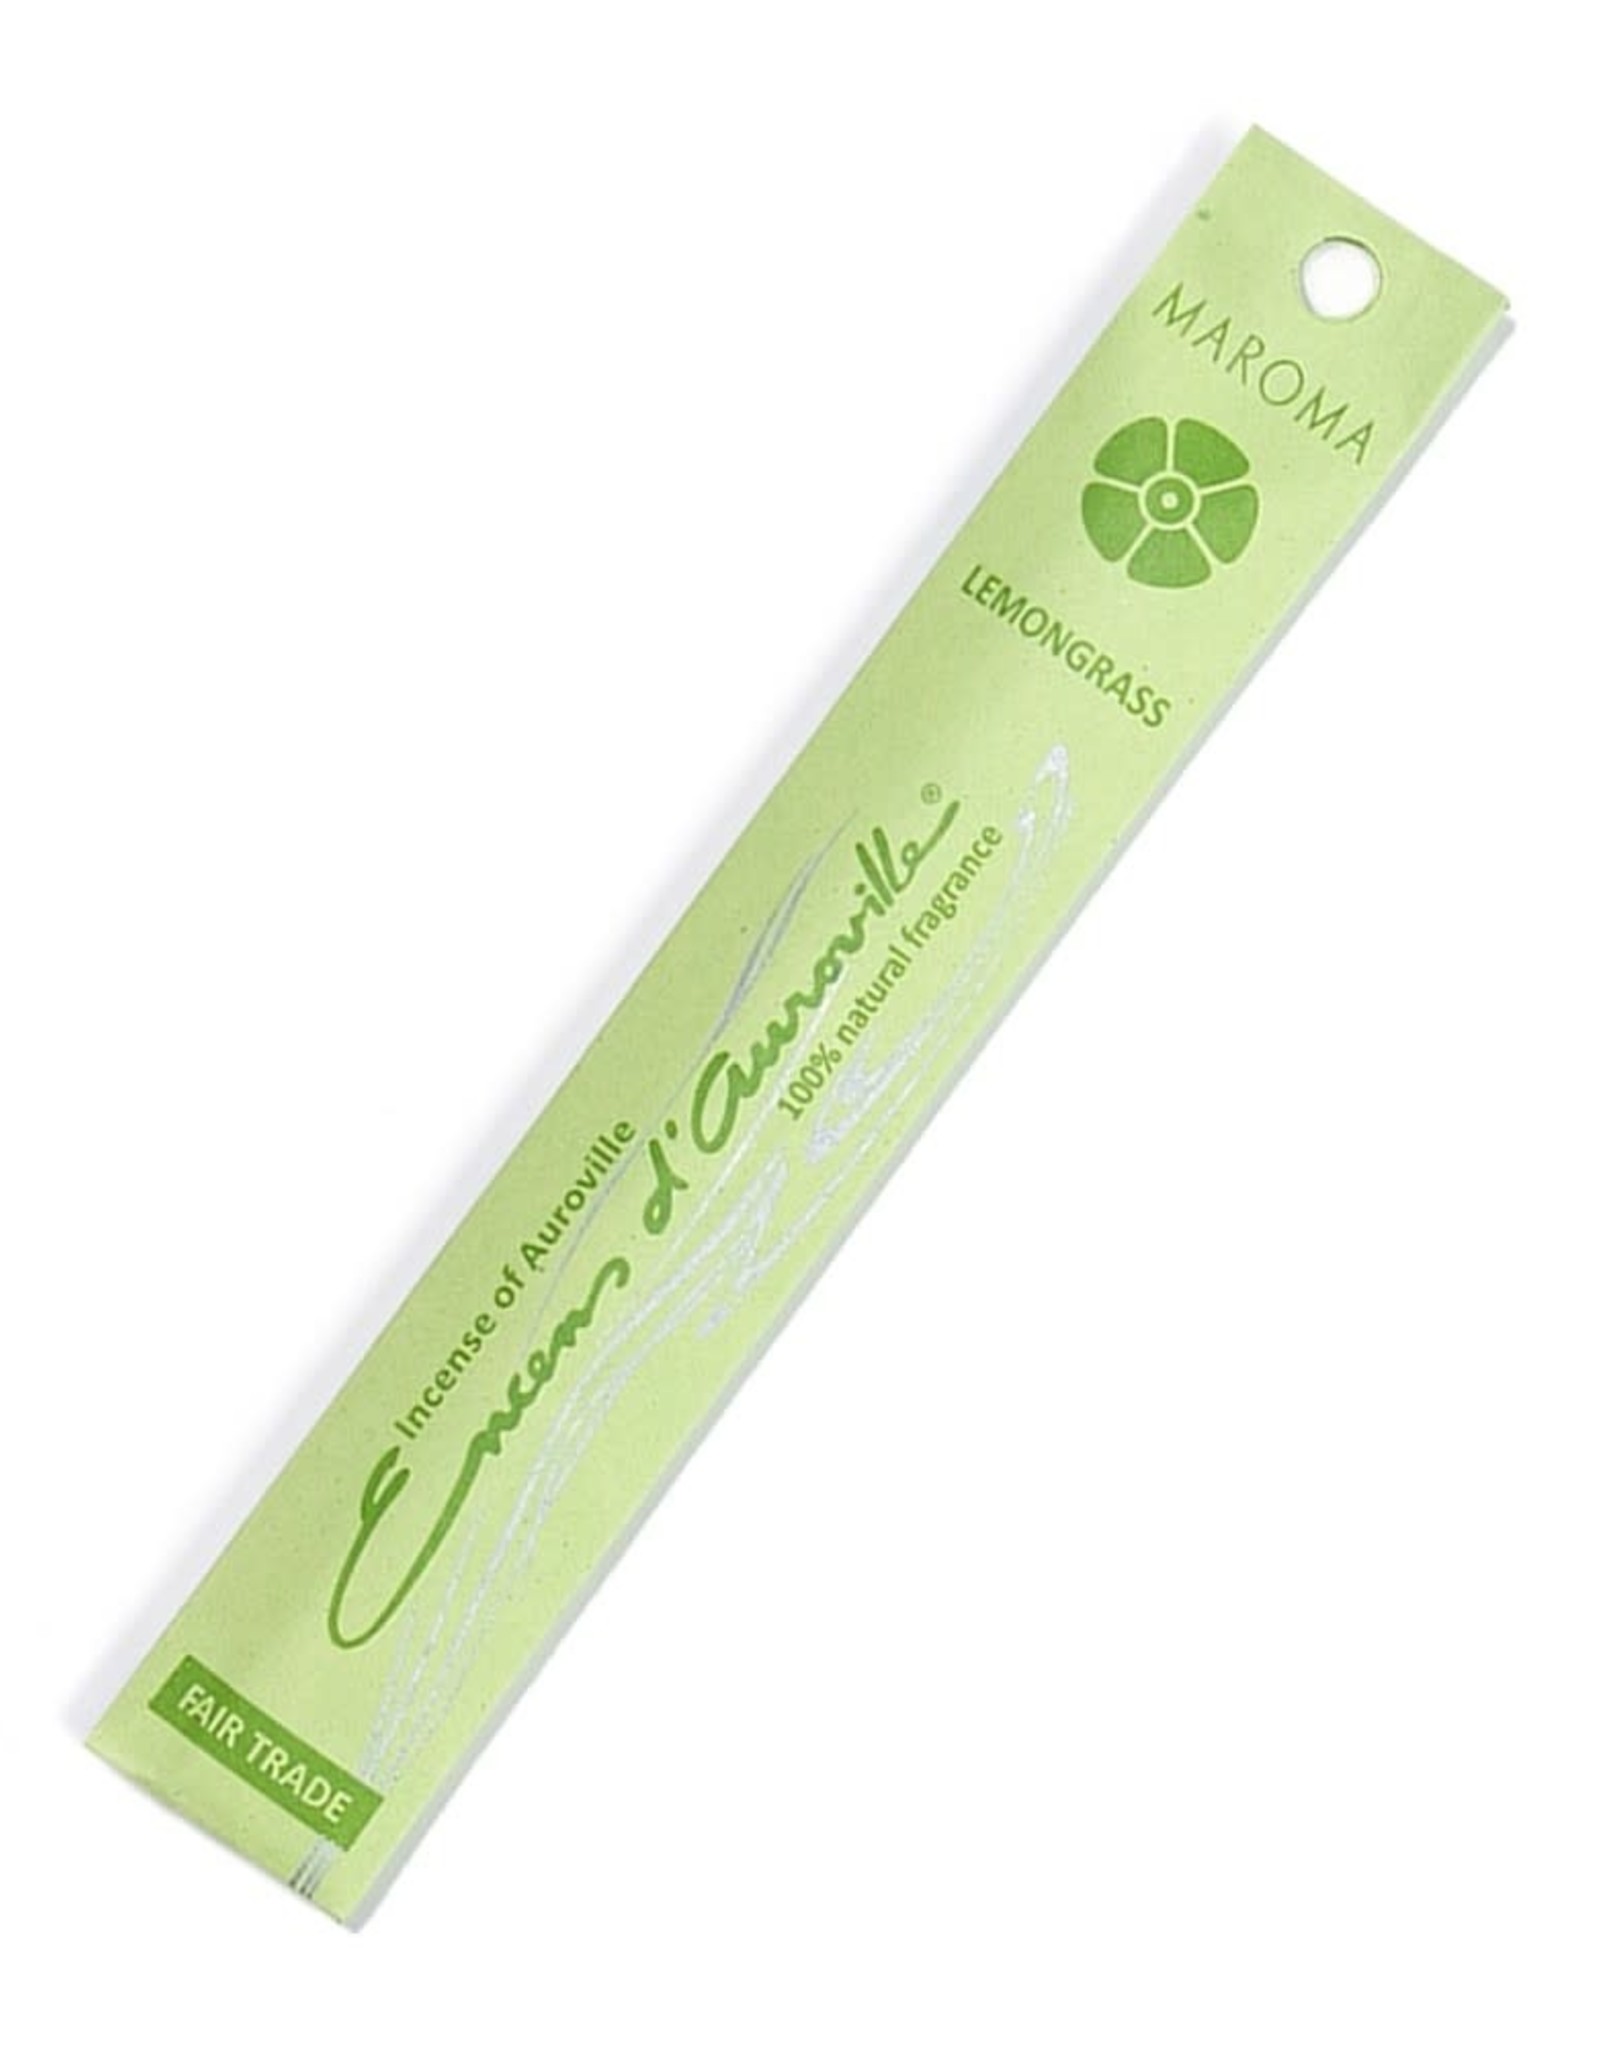 Maroma Lemongrass Premium Stick Incense